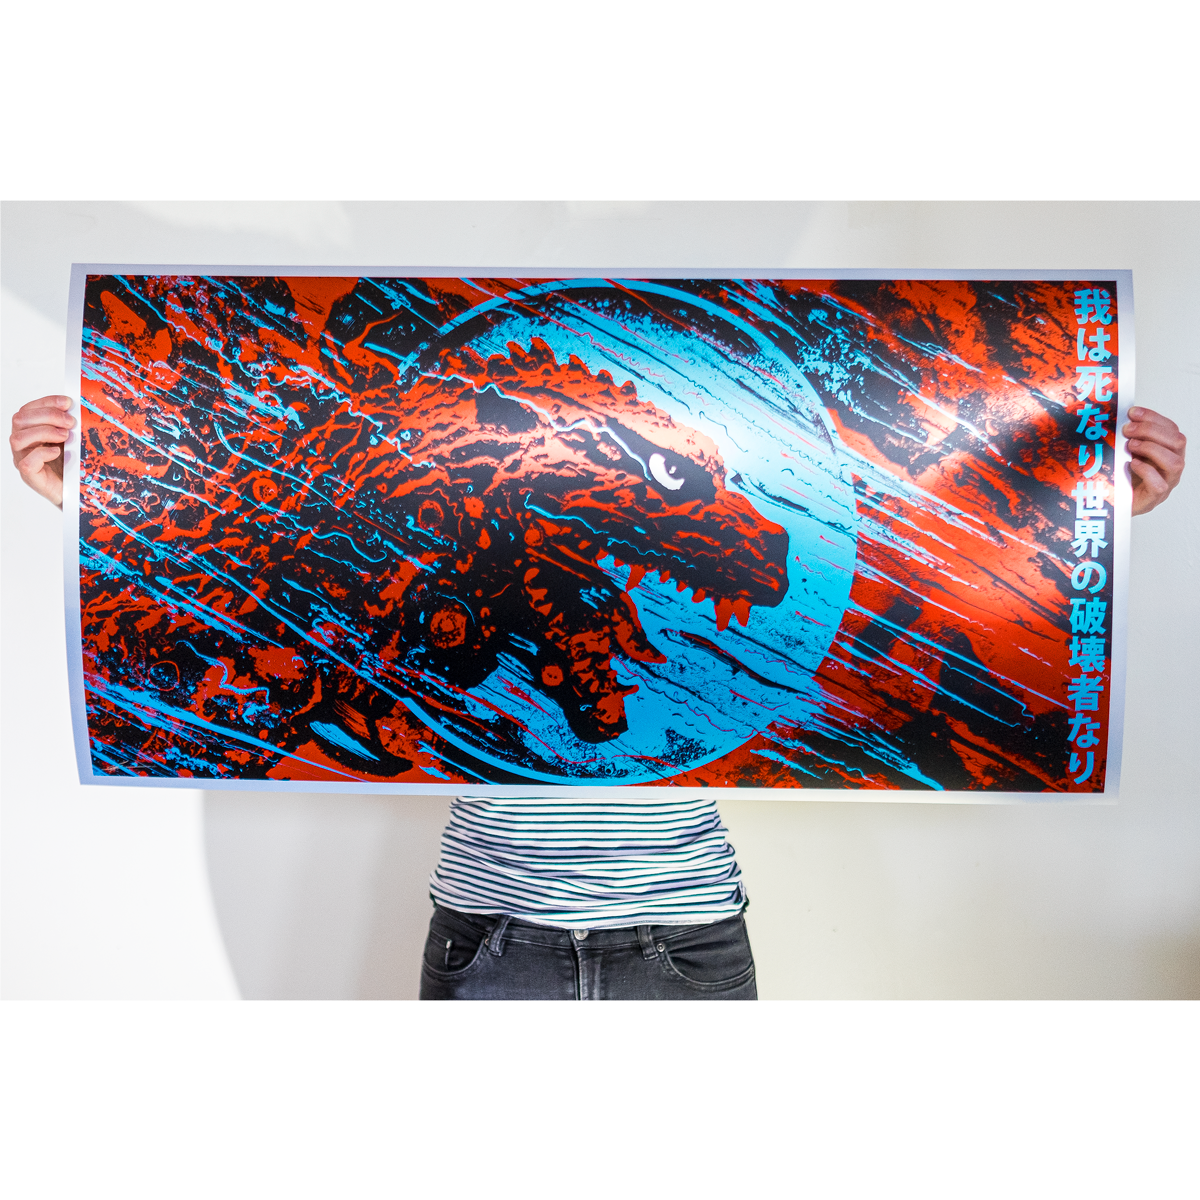 J. Bannon "Destroyer of Worlds: Inversion: Metallic Red & Blue" Print